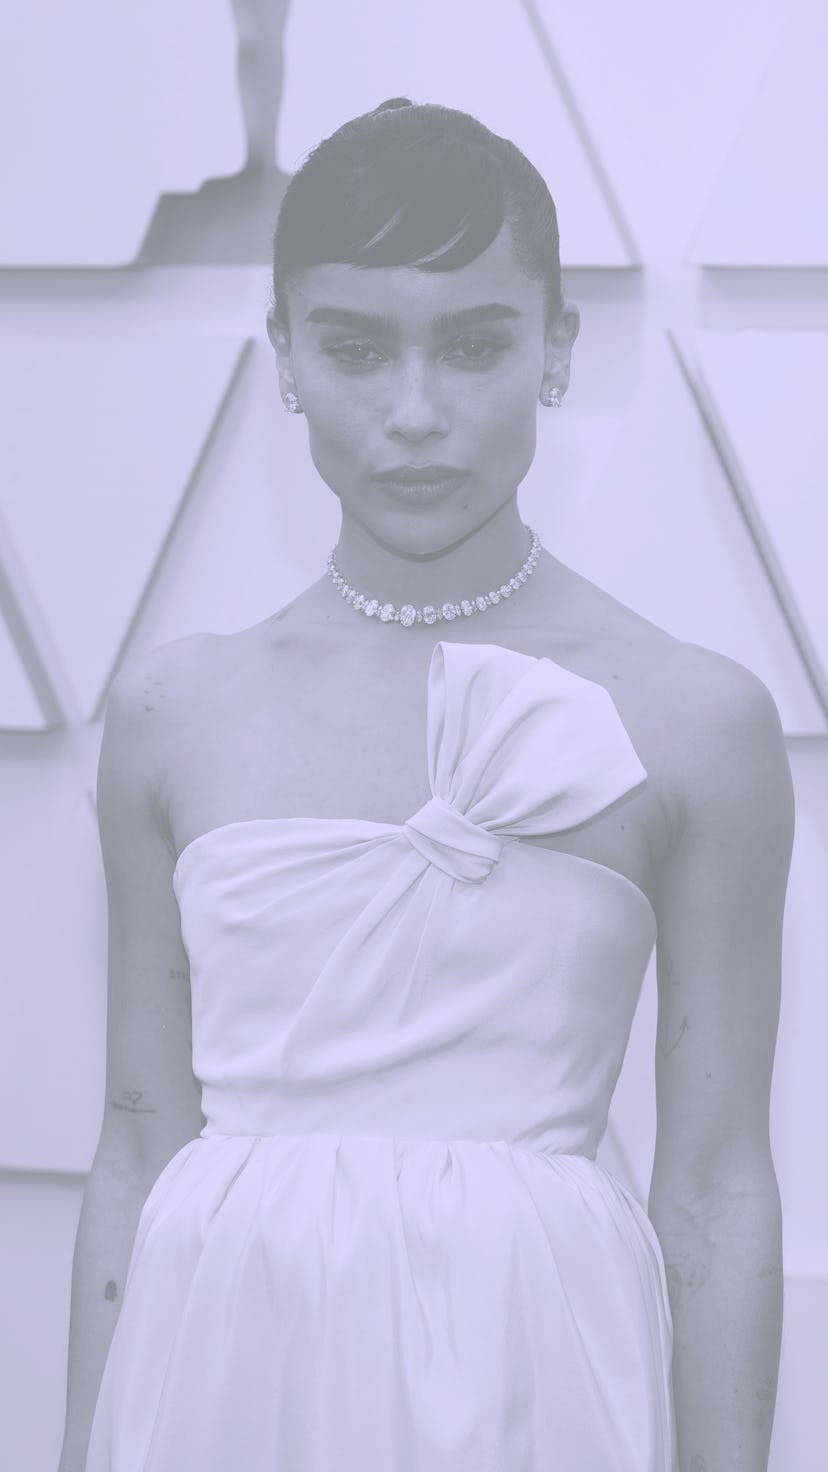 Zoë Kravitz attends the 2022 Oscars red carpet wearing pastel pink.